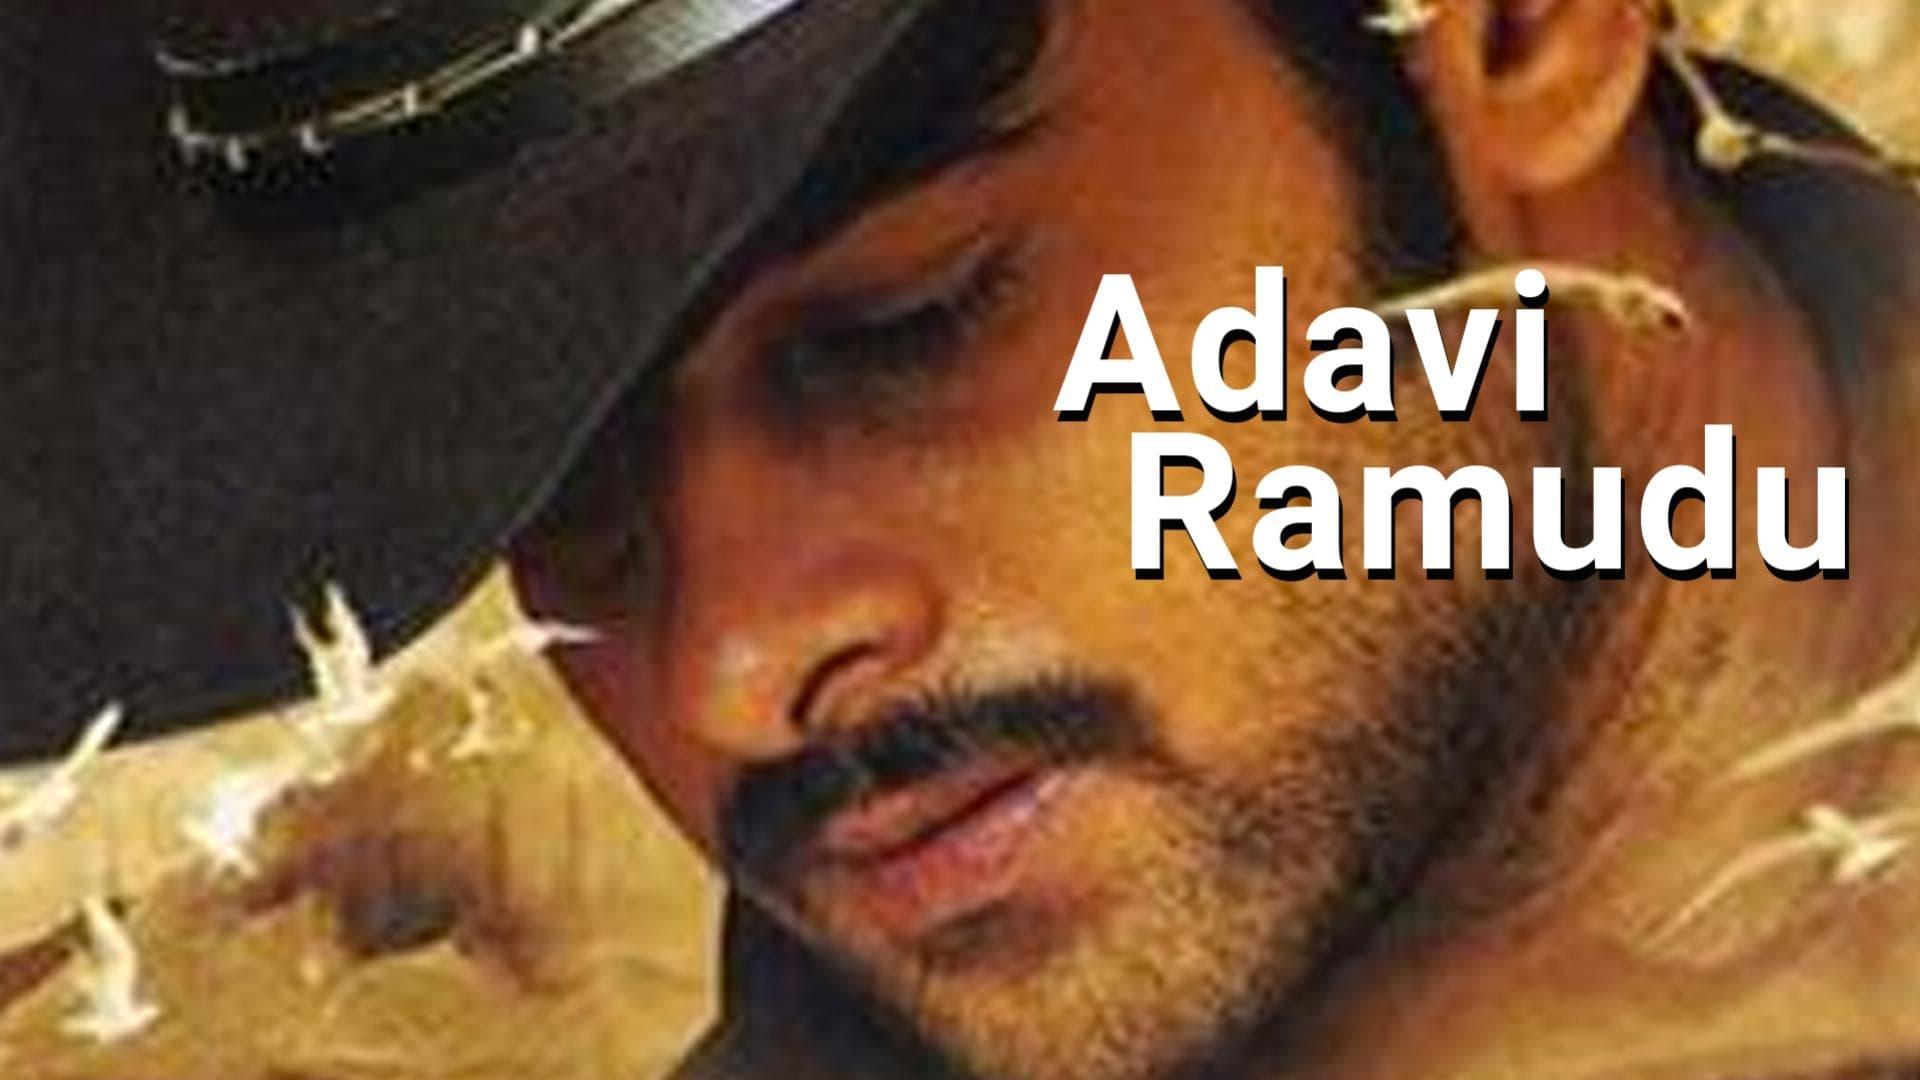 Adavi Ramudu backdrop